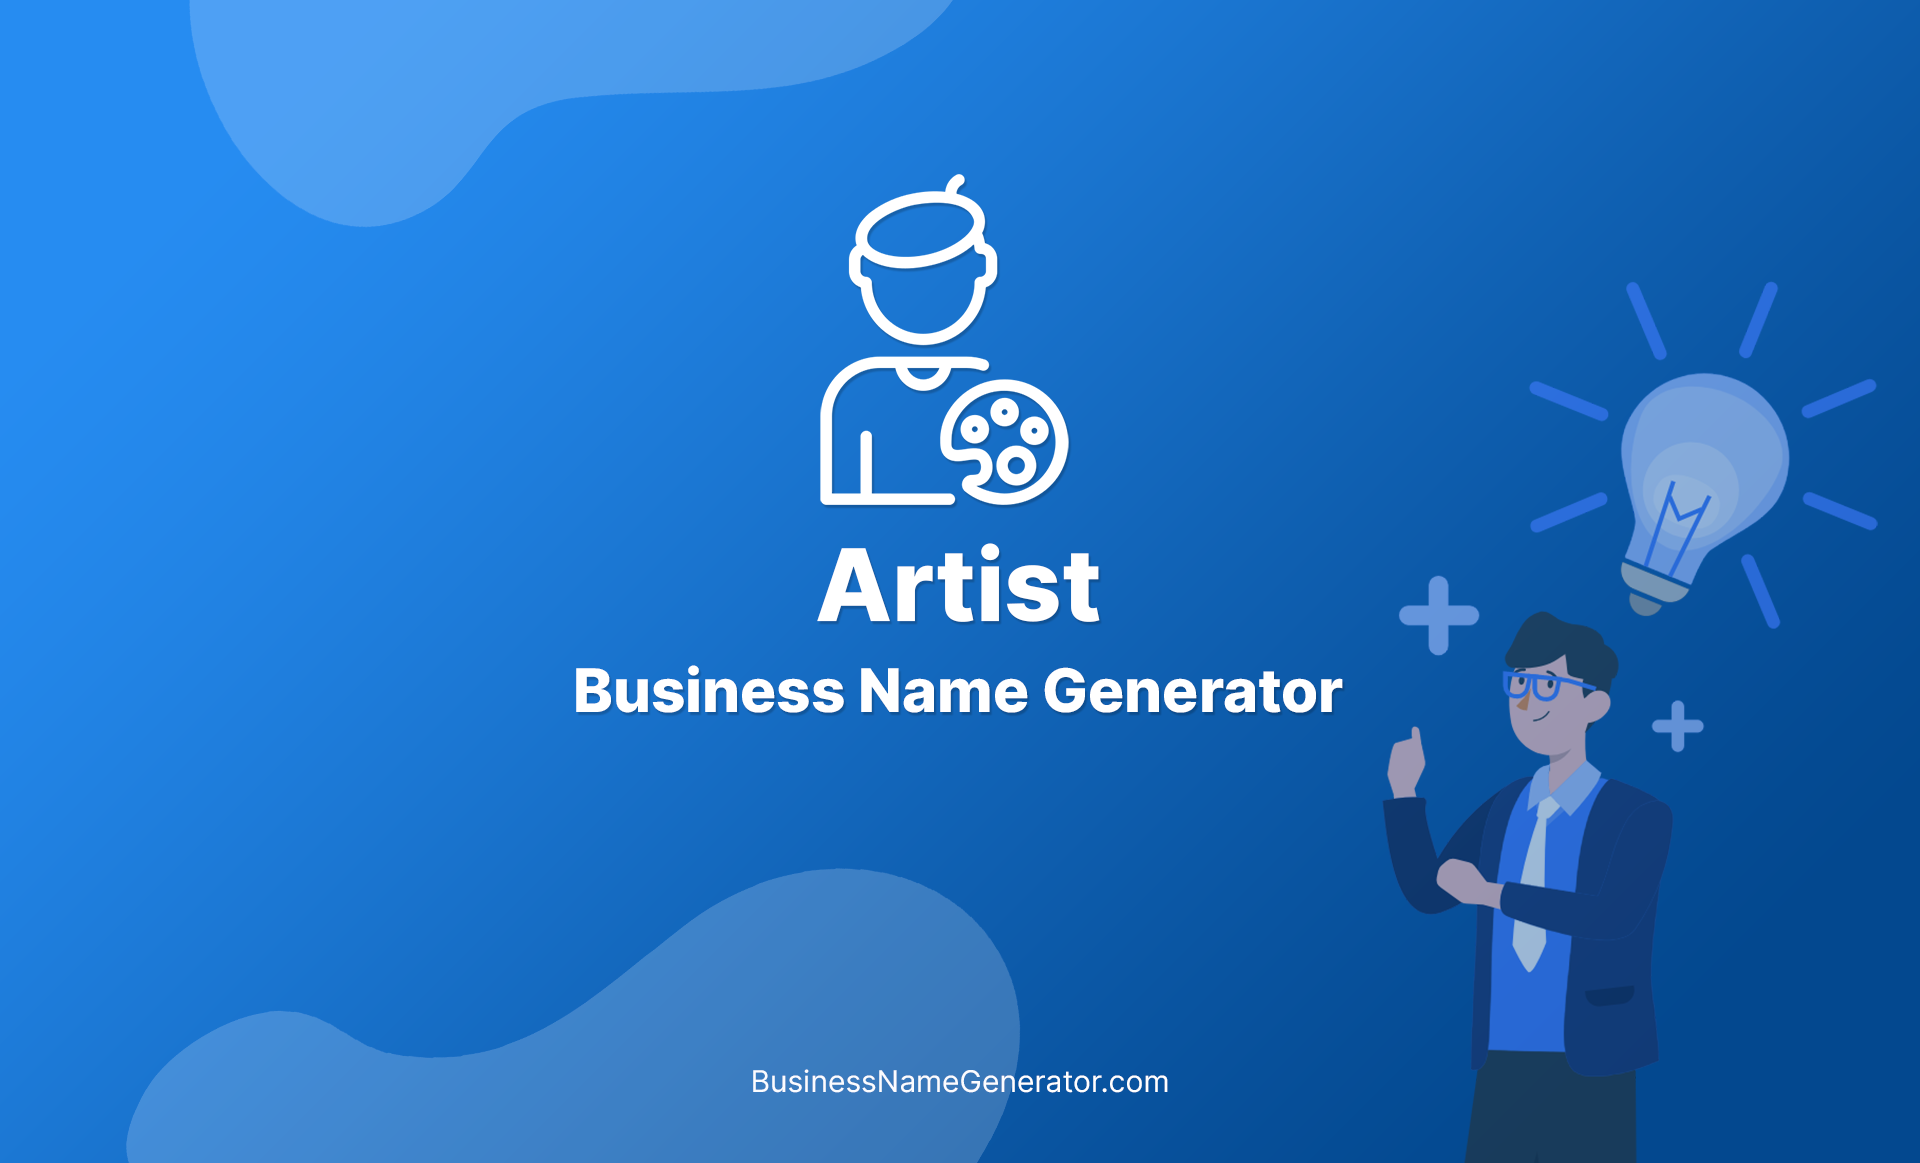 Artist Business Name Generator